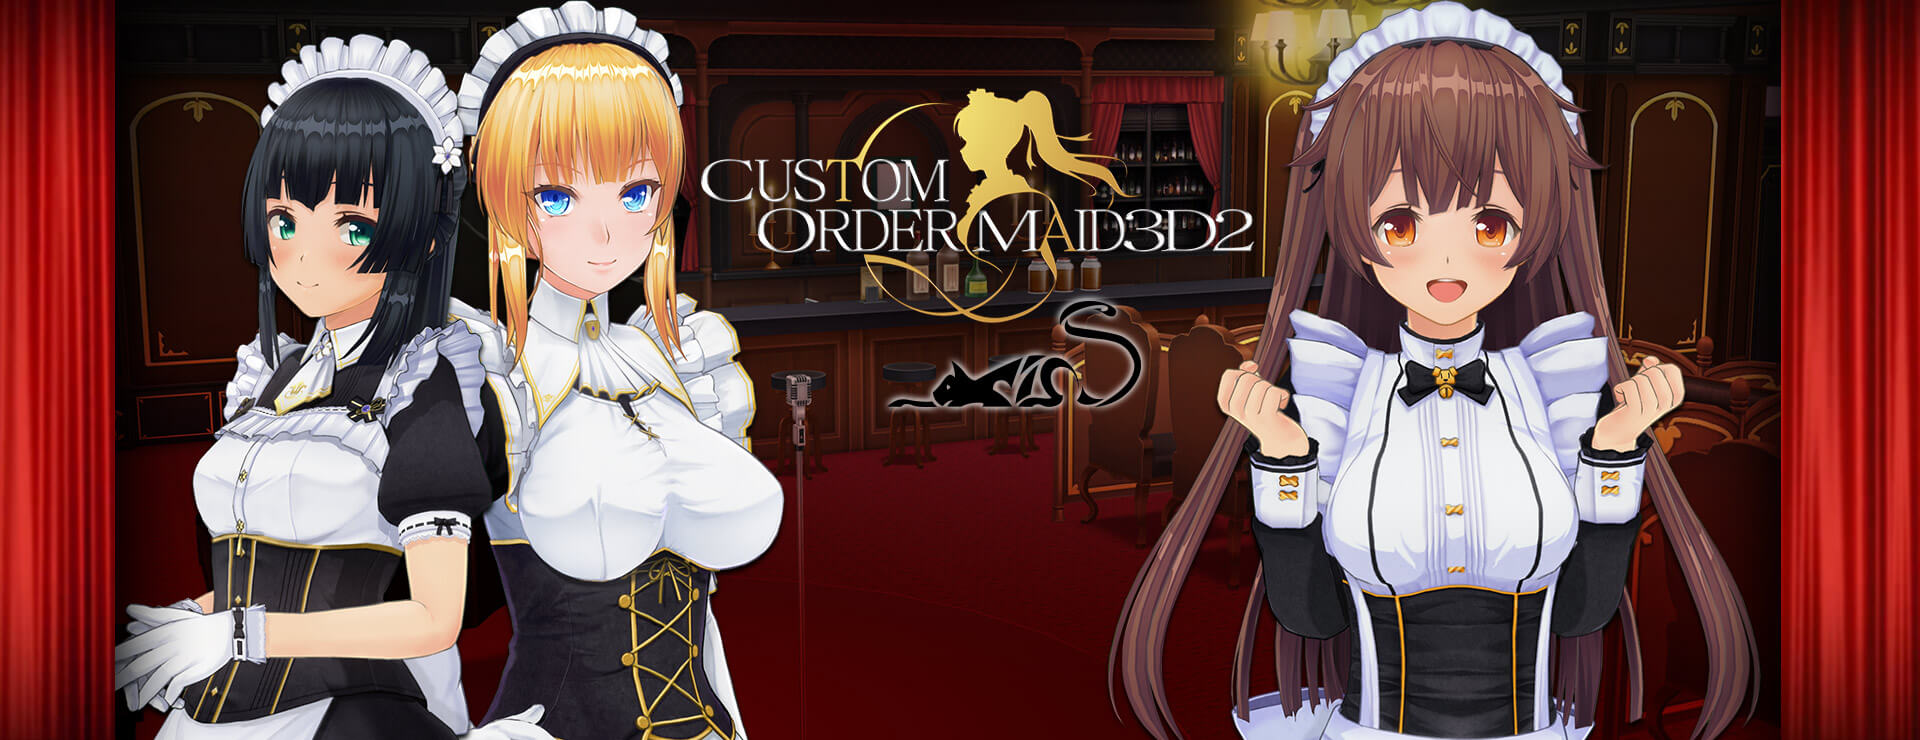 Custom Order Maid 3D2 Enjoy Empire Life GP-01 Bundle - Simulation Spiel